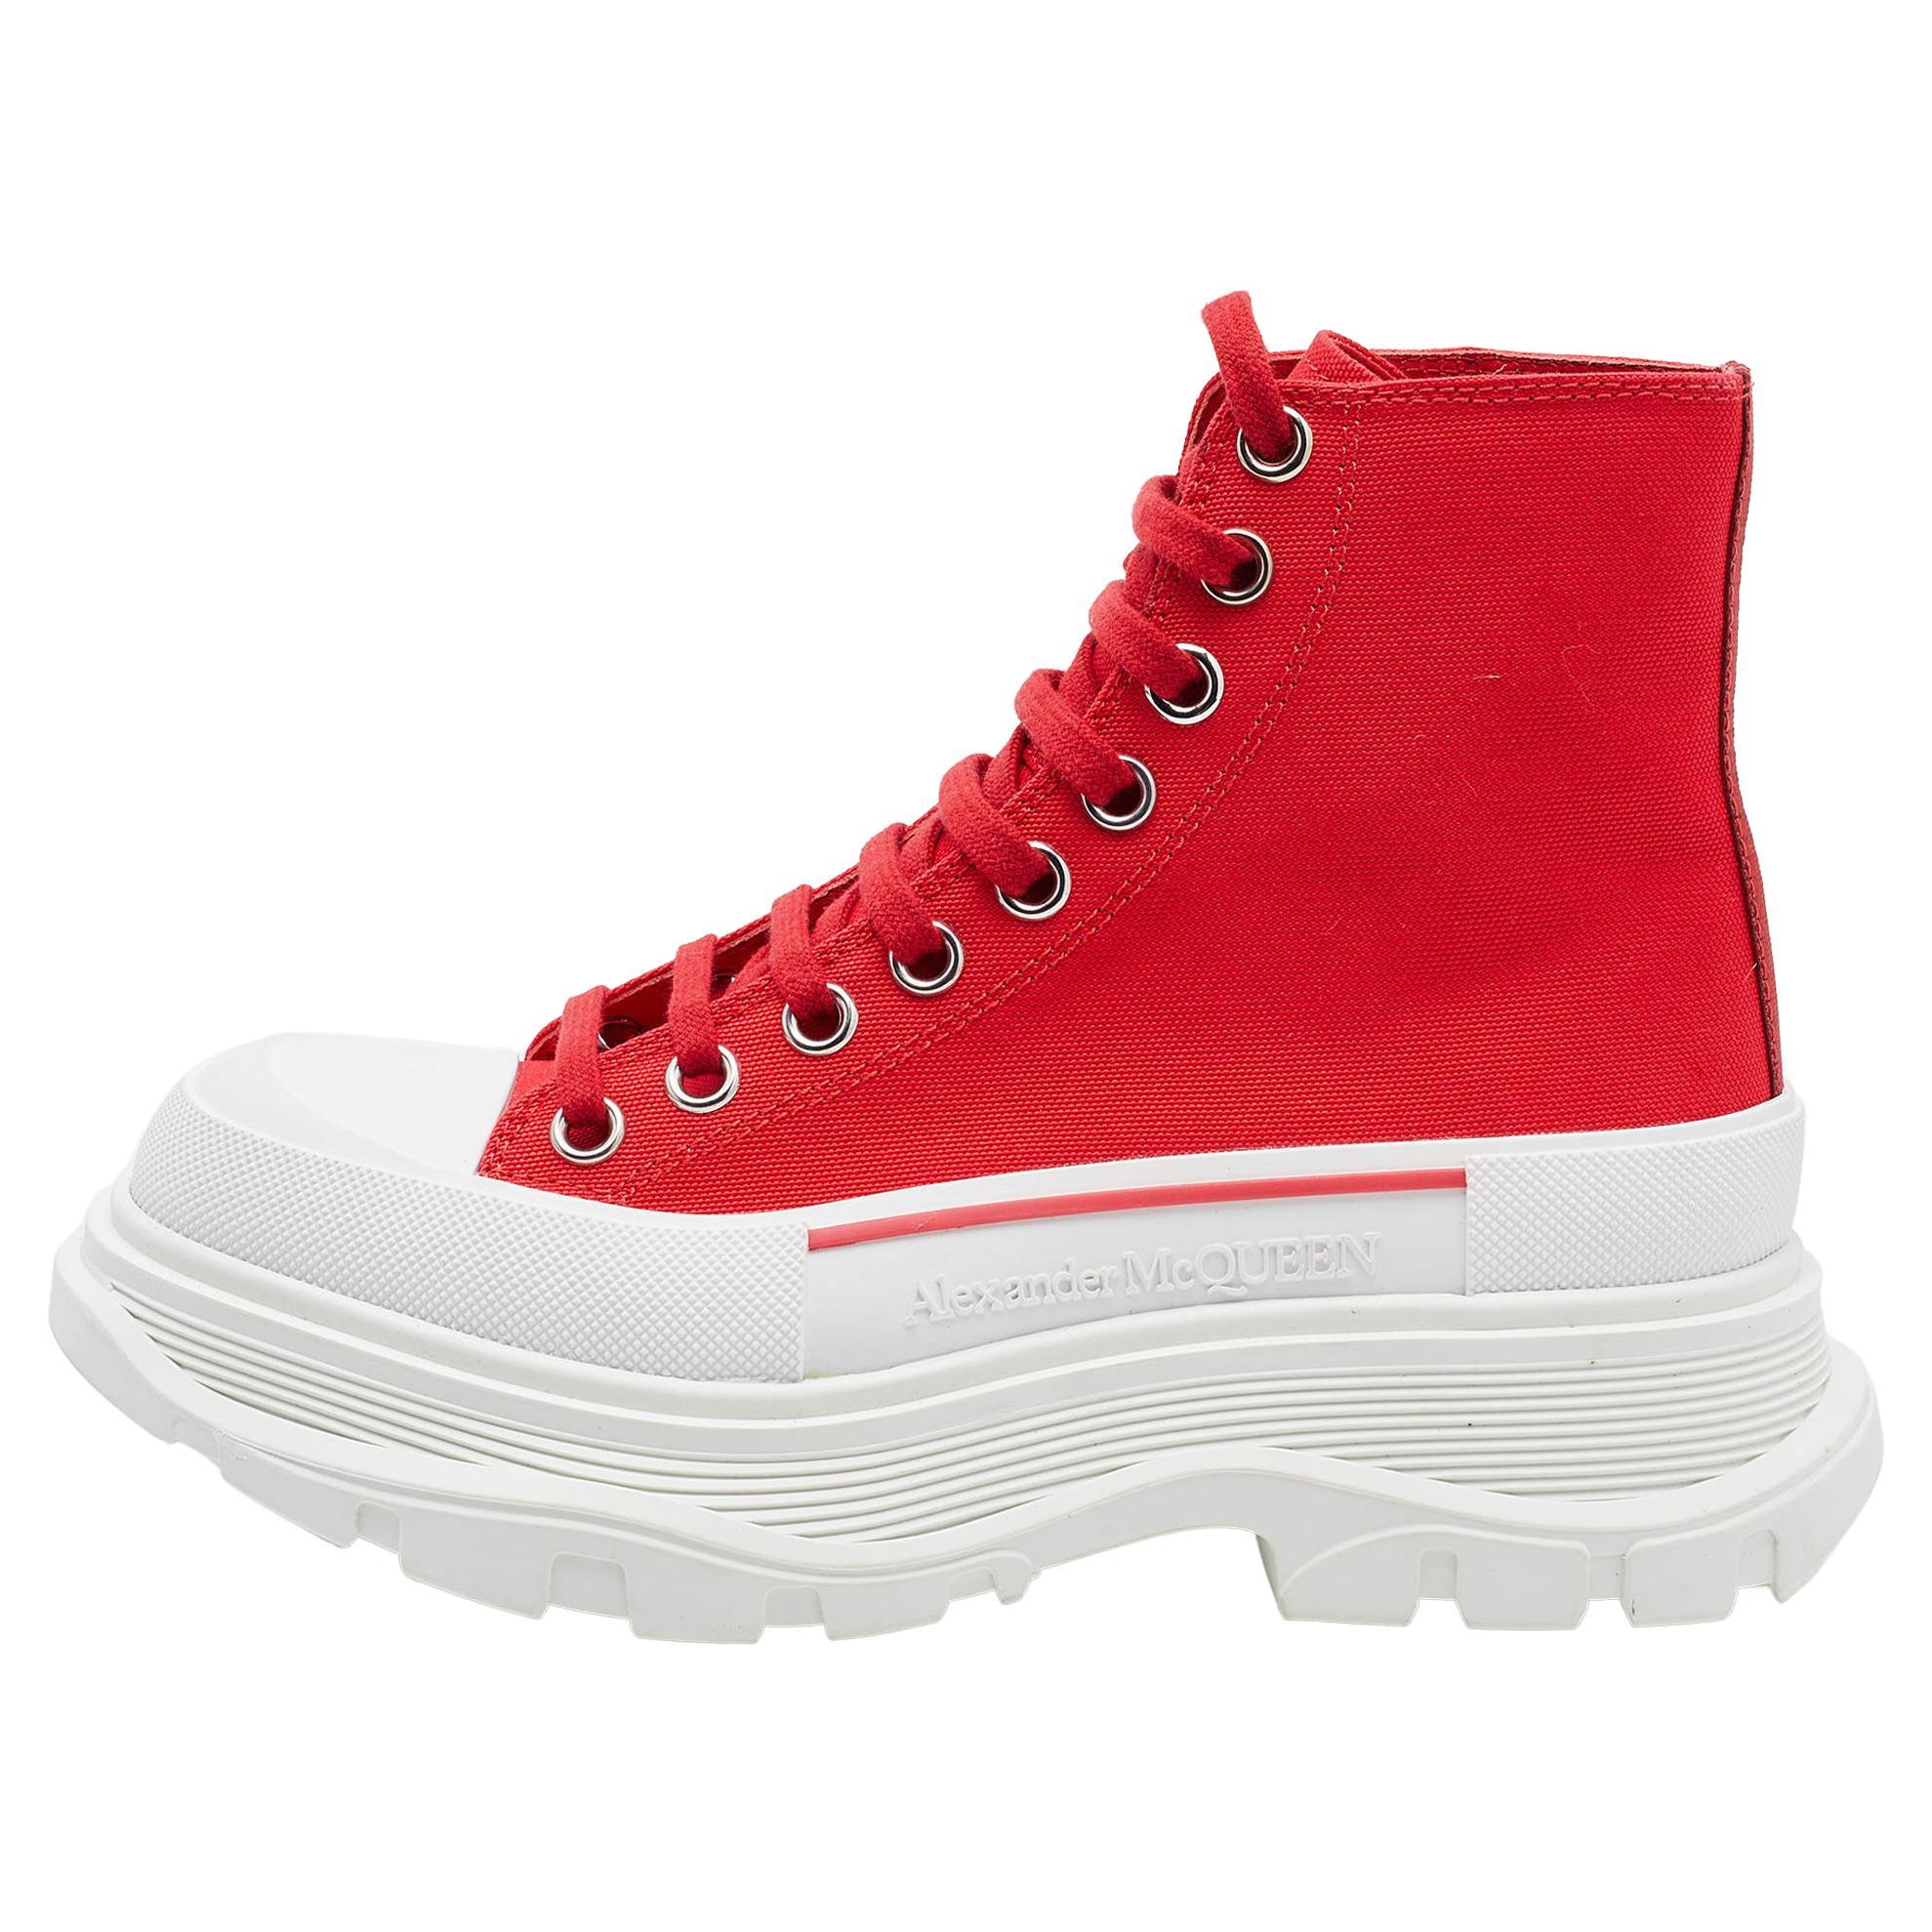 Alexander McQueen Red Canvas Tread Slick High Top Sneakers Size 36